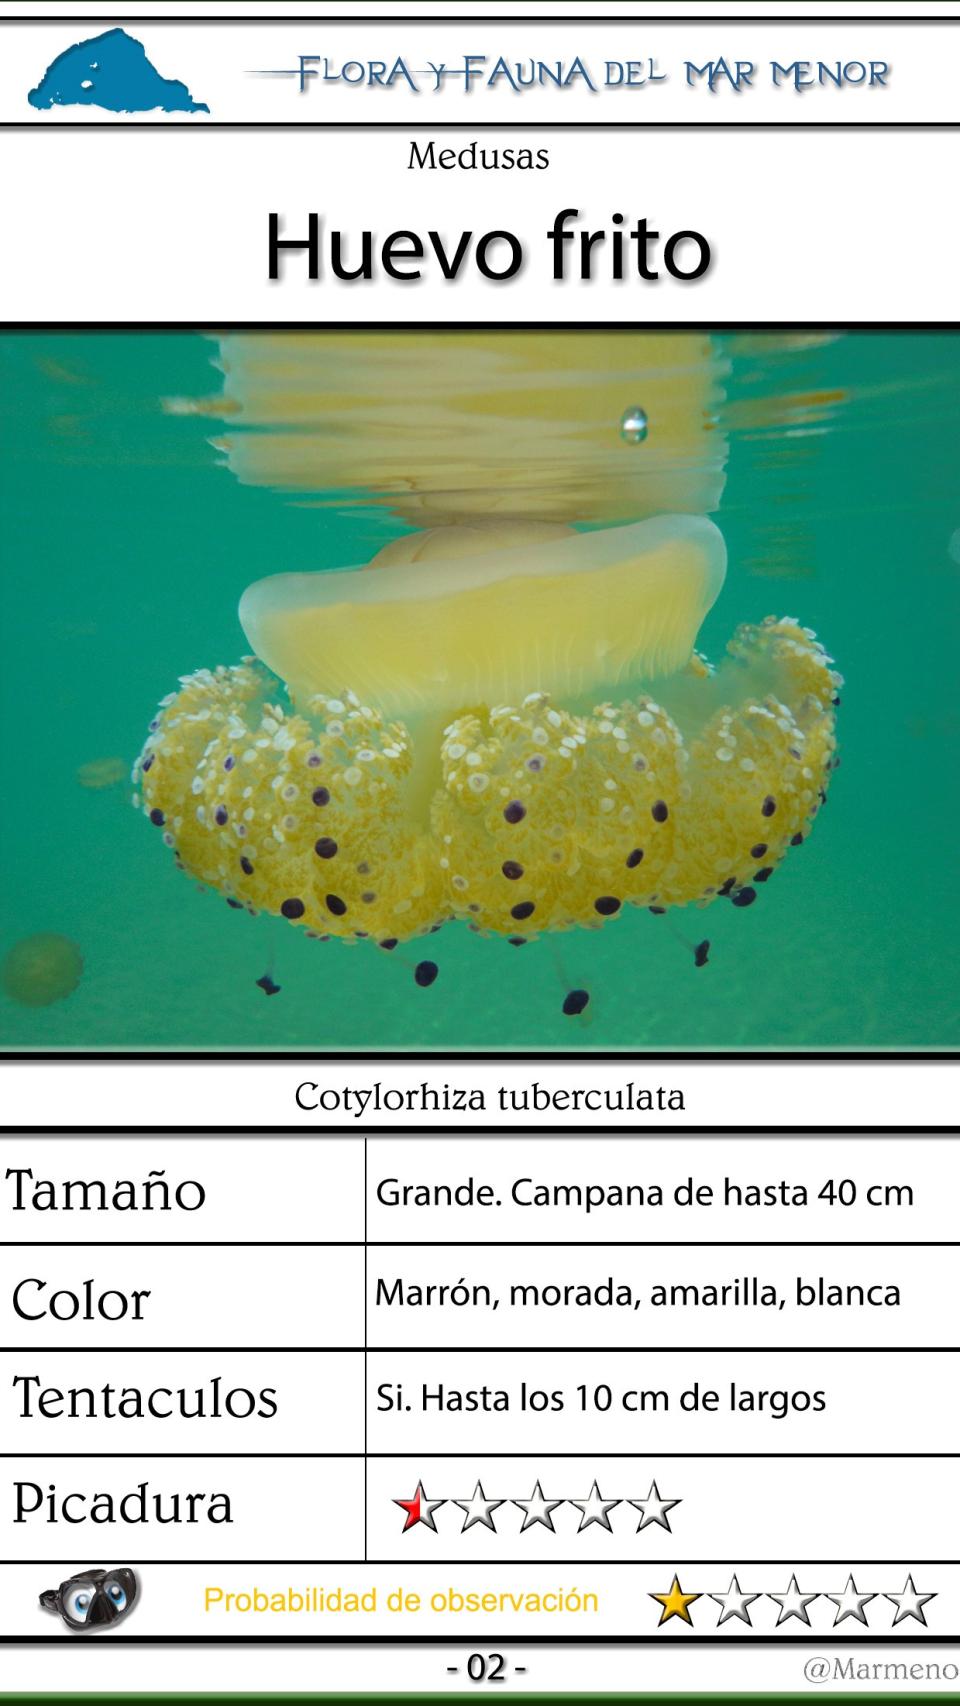 La ficha de la medusa conocida popularmente como 'huevo frito'.